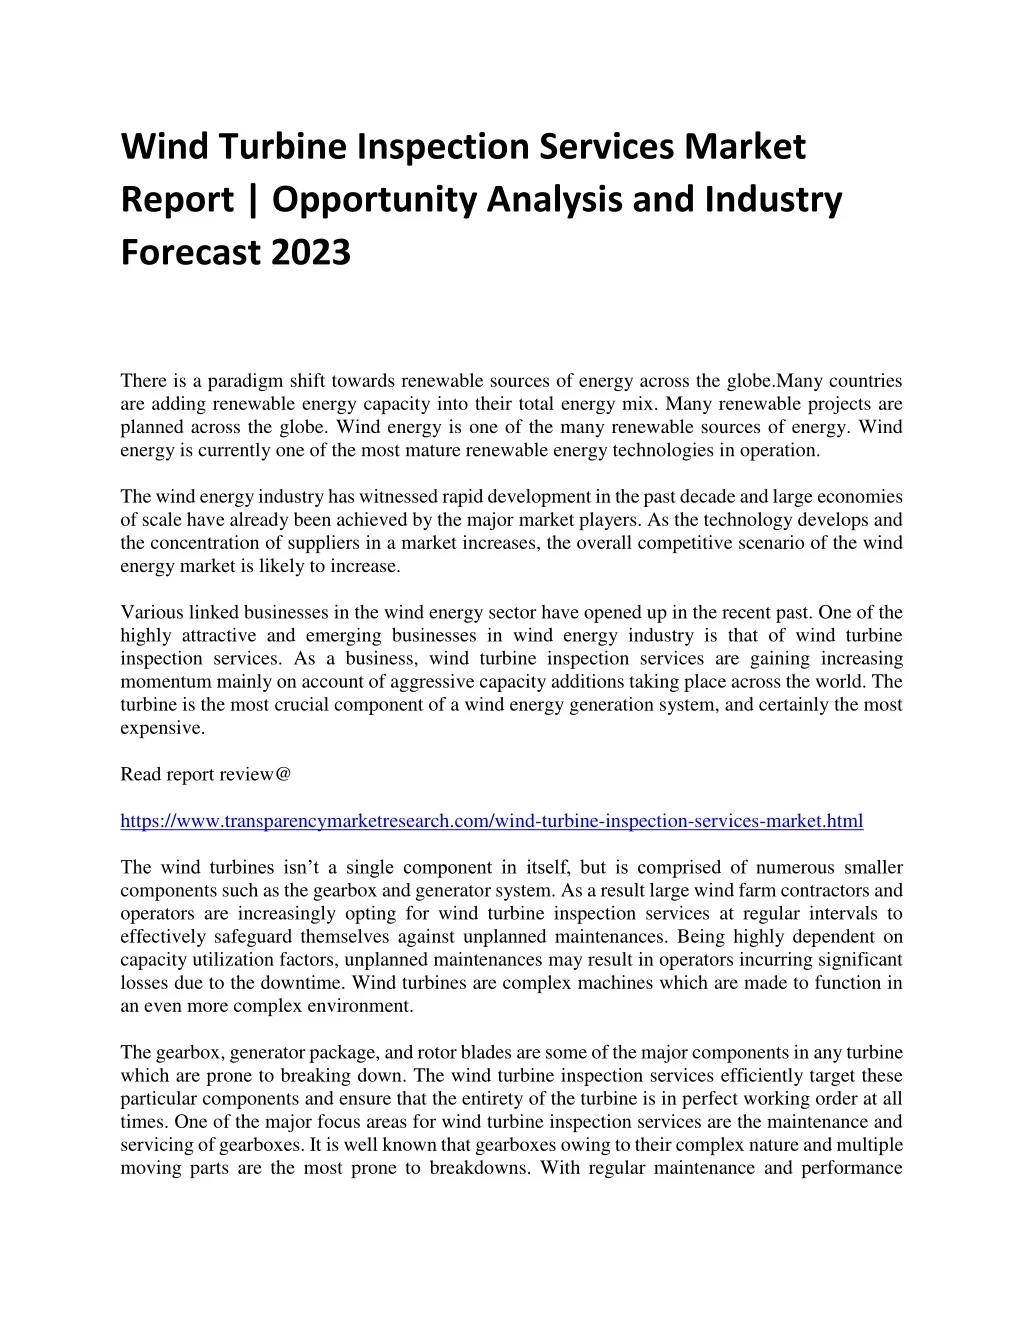 wind turbine inspection services market report